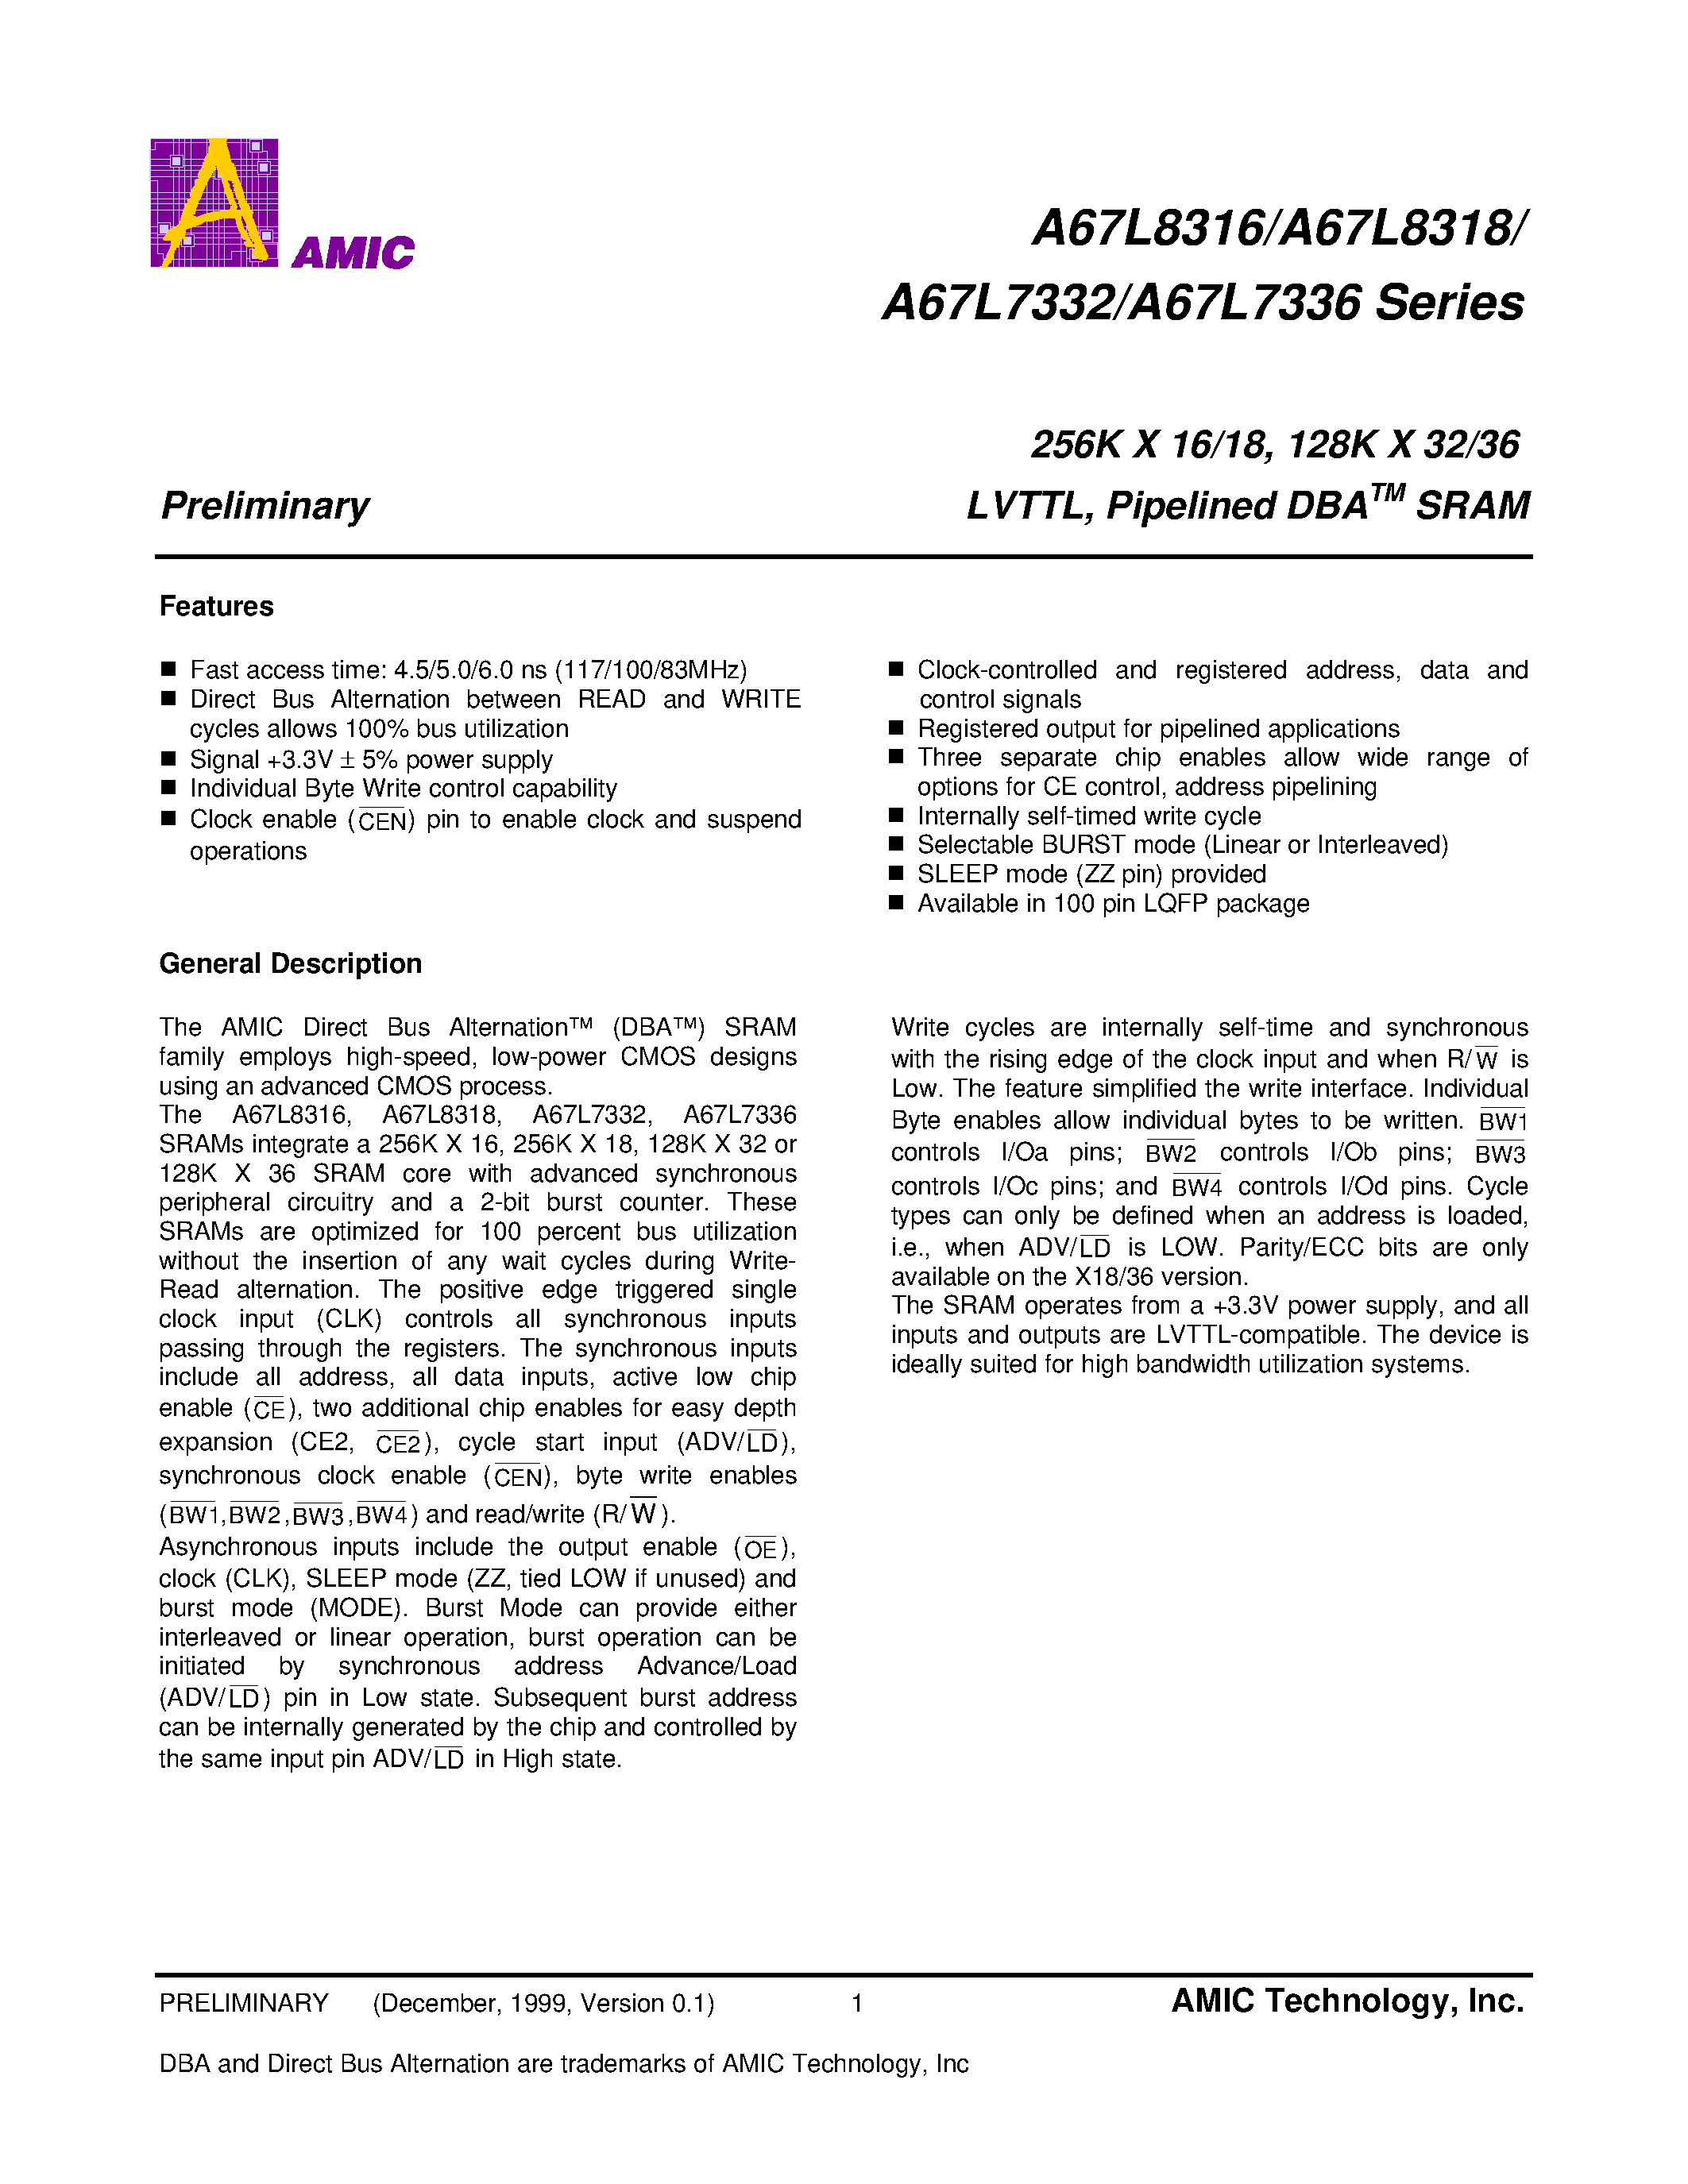 Datasheet A67L7336E-6 - 256K X 16/18/ 128K X 32/36 LVTTL/ Pipelined DBA SRAM page 2